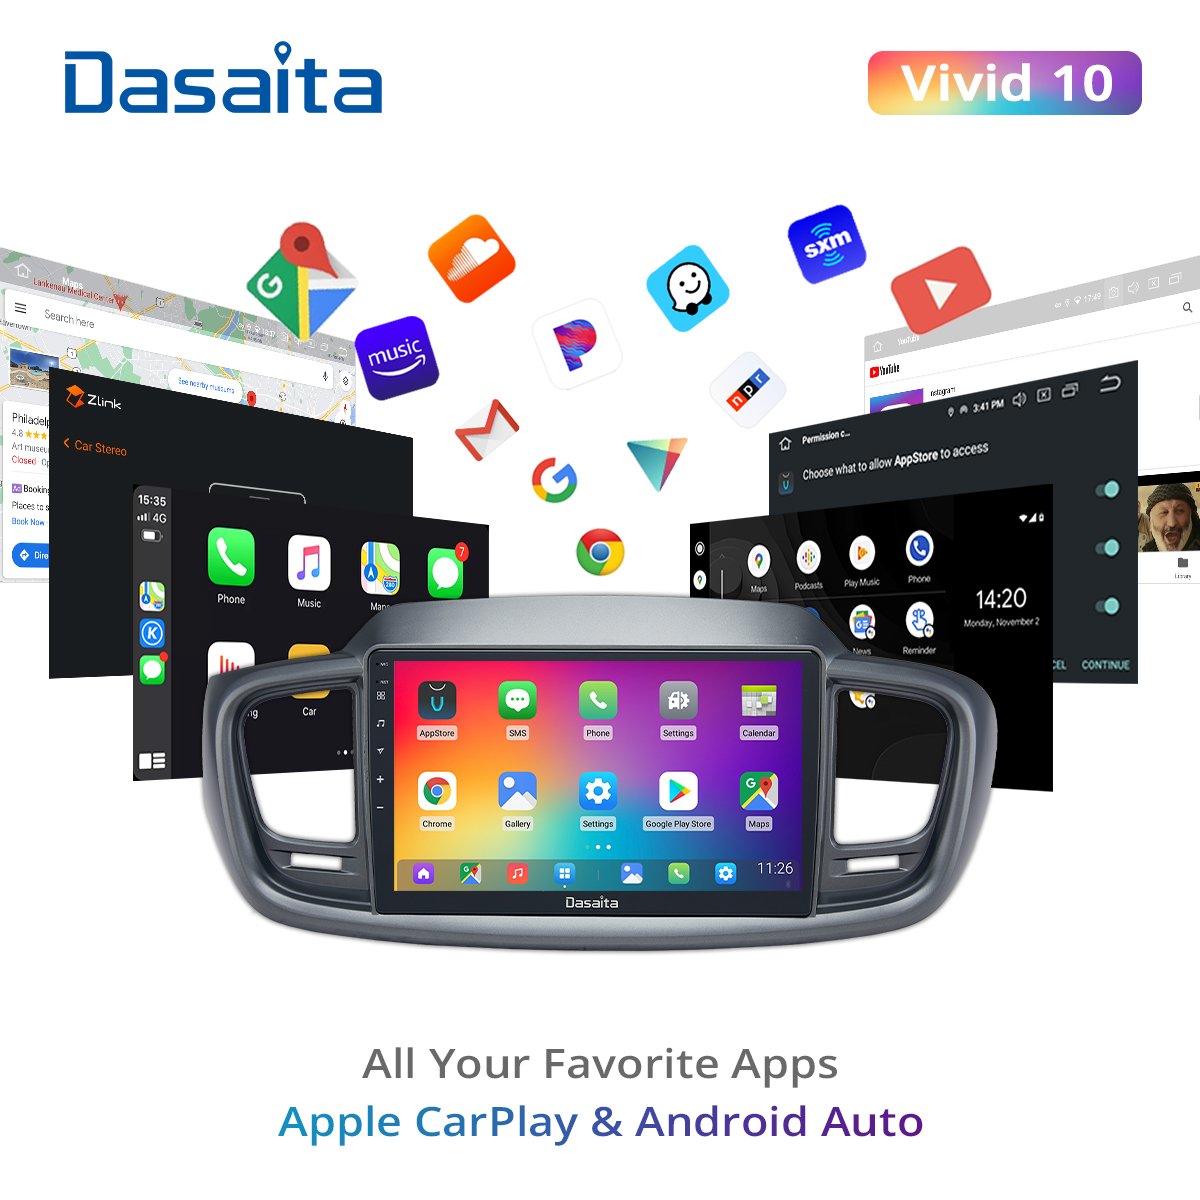 Dasaita Vivid for Kia Sorento 2014 2015 Car Radio 10.2" Android 10.0 Auto Stereo with GPS Carplay 1280*720 Touch 4GB+64GB 1 Din